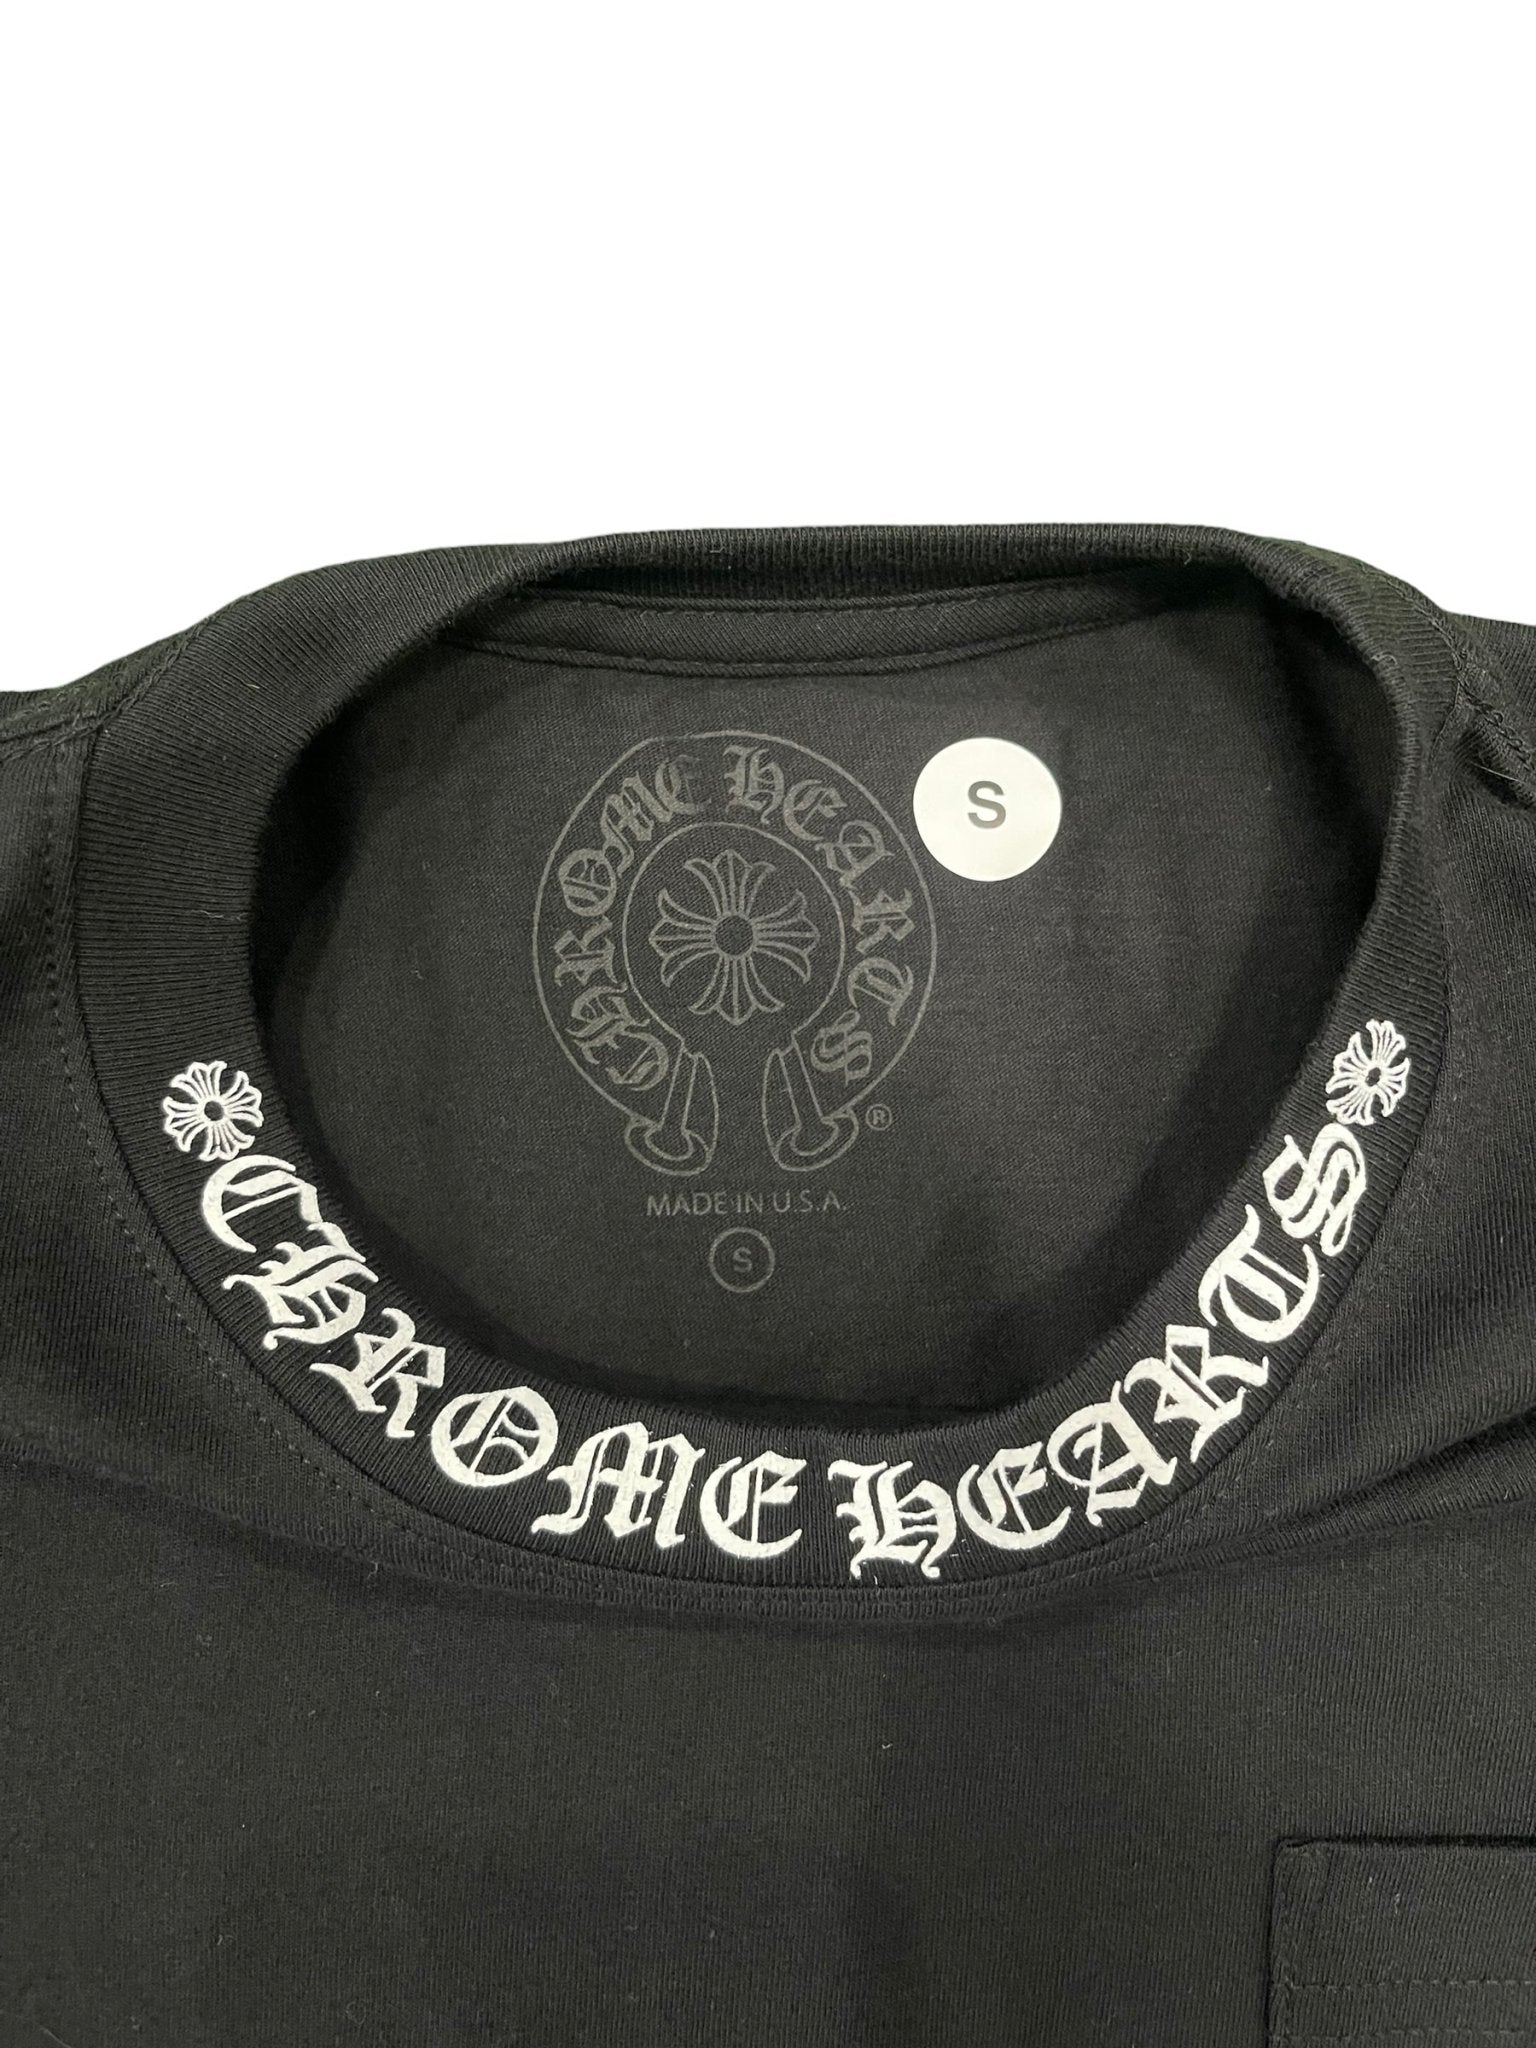 Chrome Hearts Neck Logo S/S T-shirt Black - Paroissesaintefoy Sneakers Sale Online